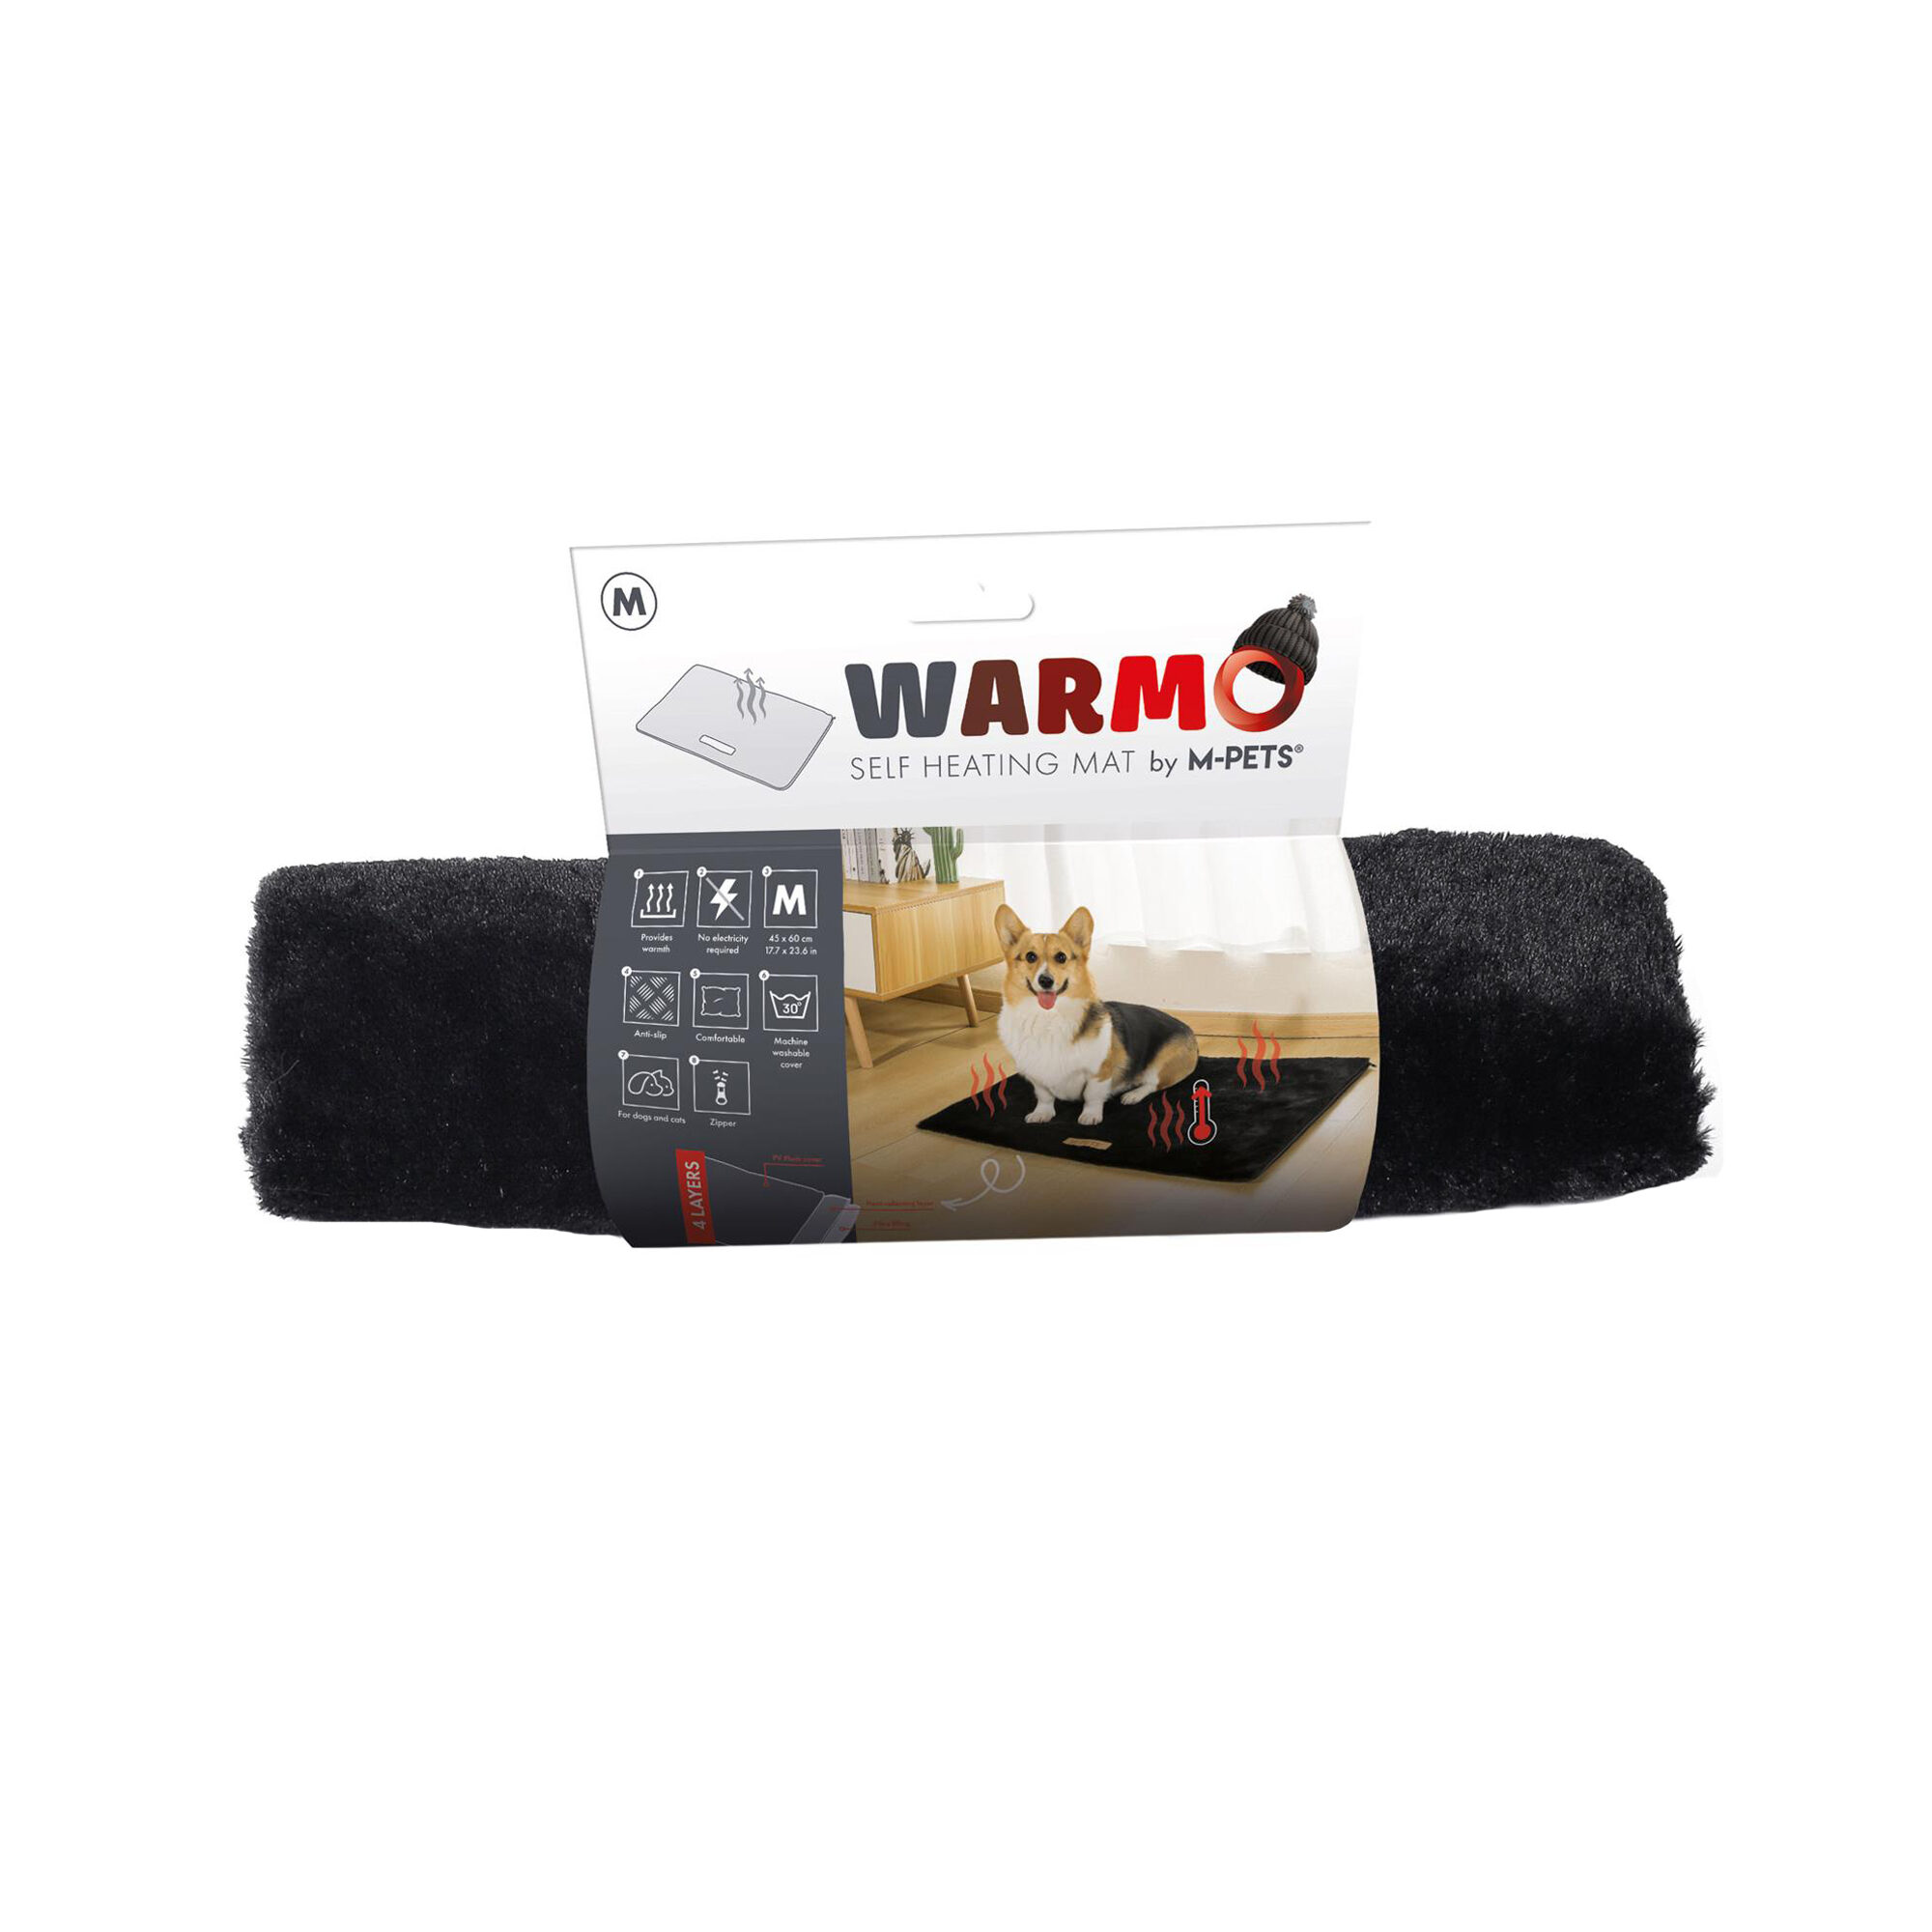 M-Pets Self Heating Mat